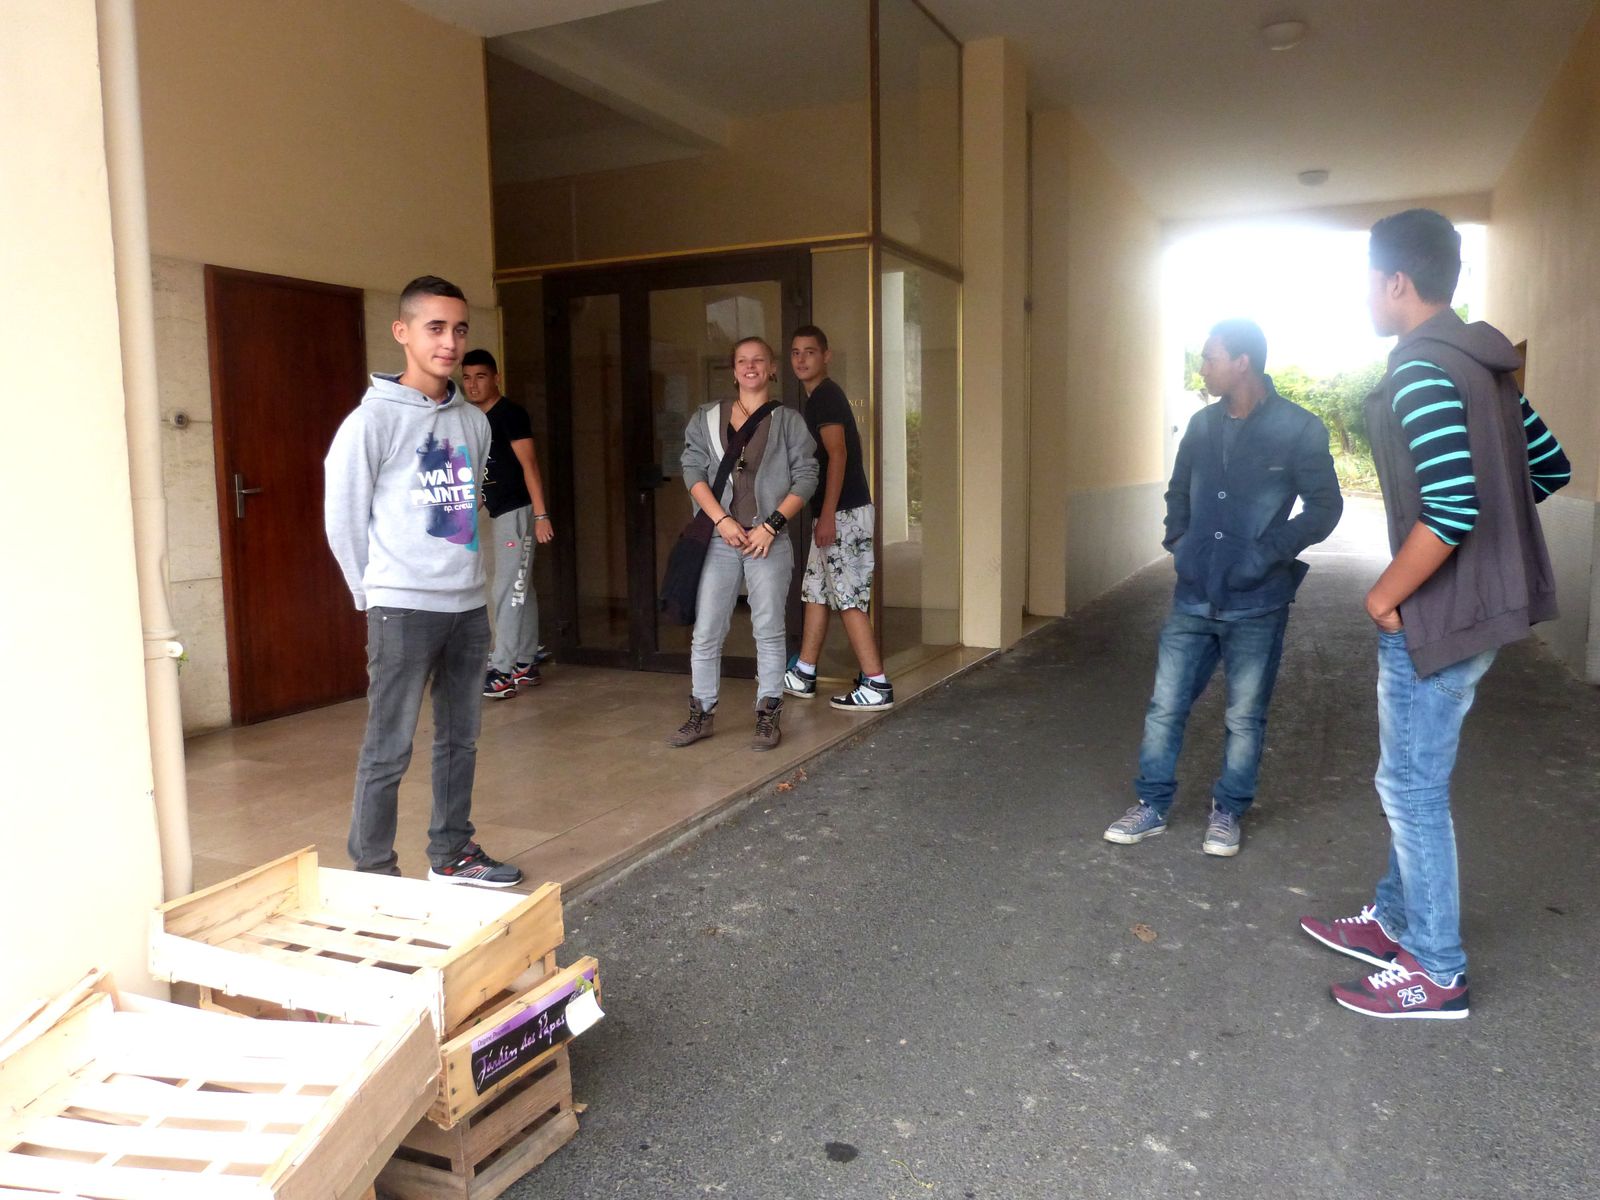 Déménagement bénévole à Bergerac, octobre 2014 : Redi, Raju, elsa, Joy, Abas, Kévin, Morgane + Patrick, Fouad, Nicolas